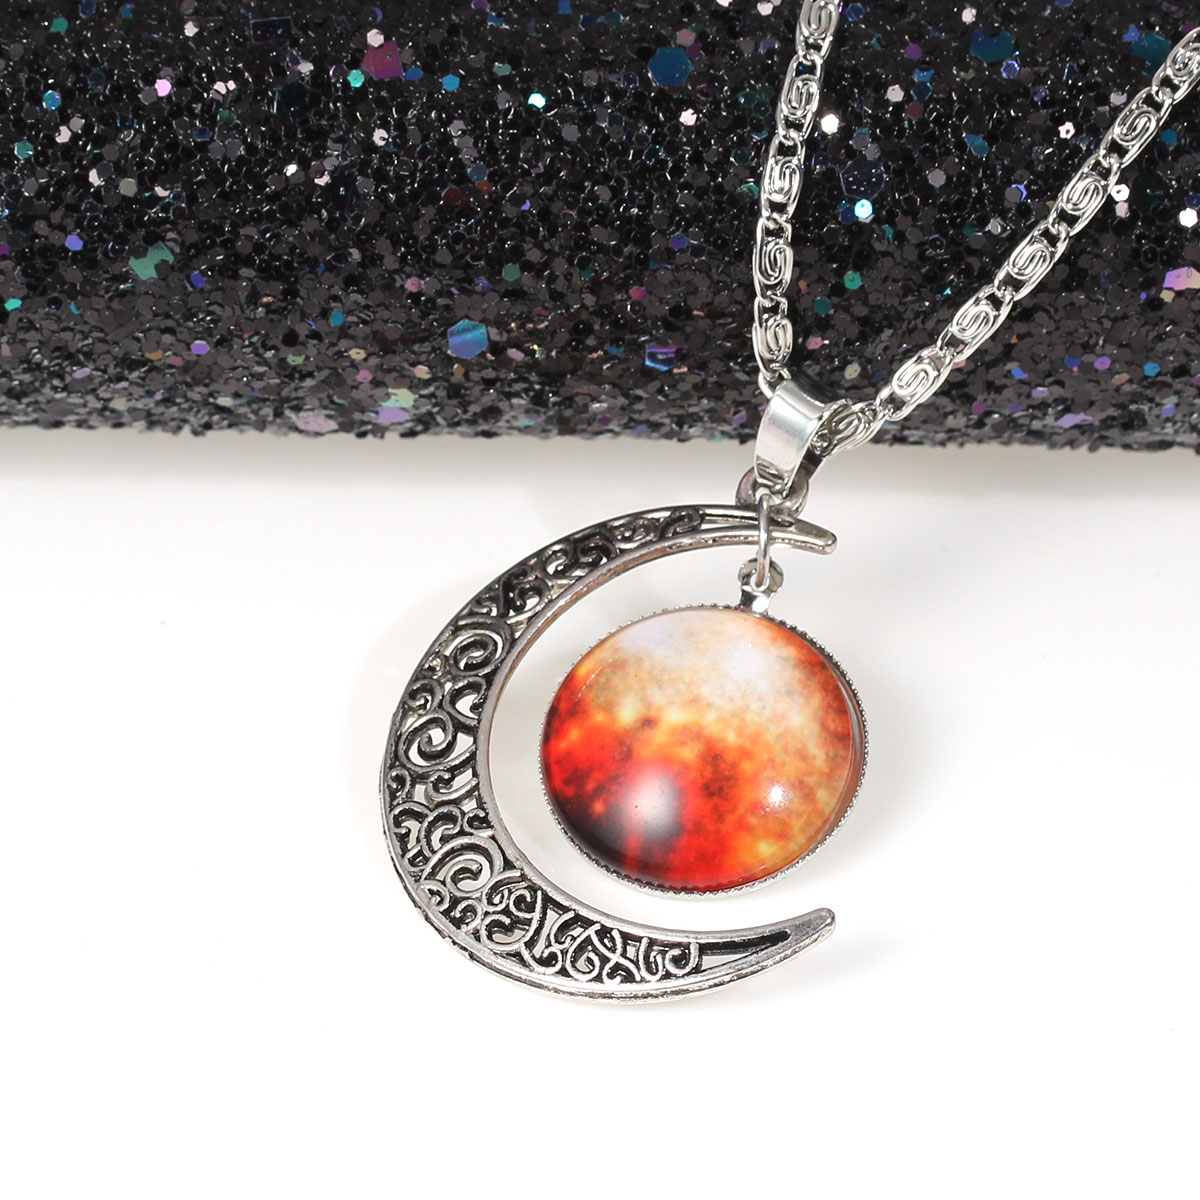 Picture of New Fashion Galaxy Universe Crescent Moon Glass Cabochon Pendant Necklace Scroll Chain Antique Silver Multicolor 47.0cm(18 4/8") long, 1 Piece